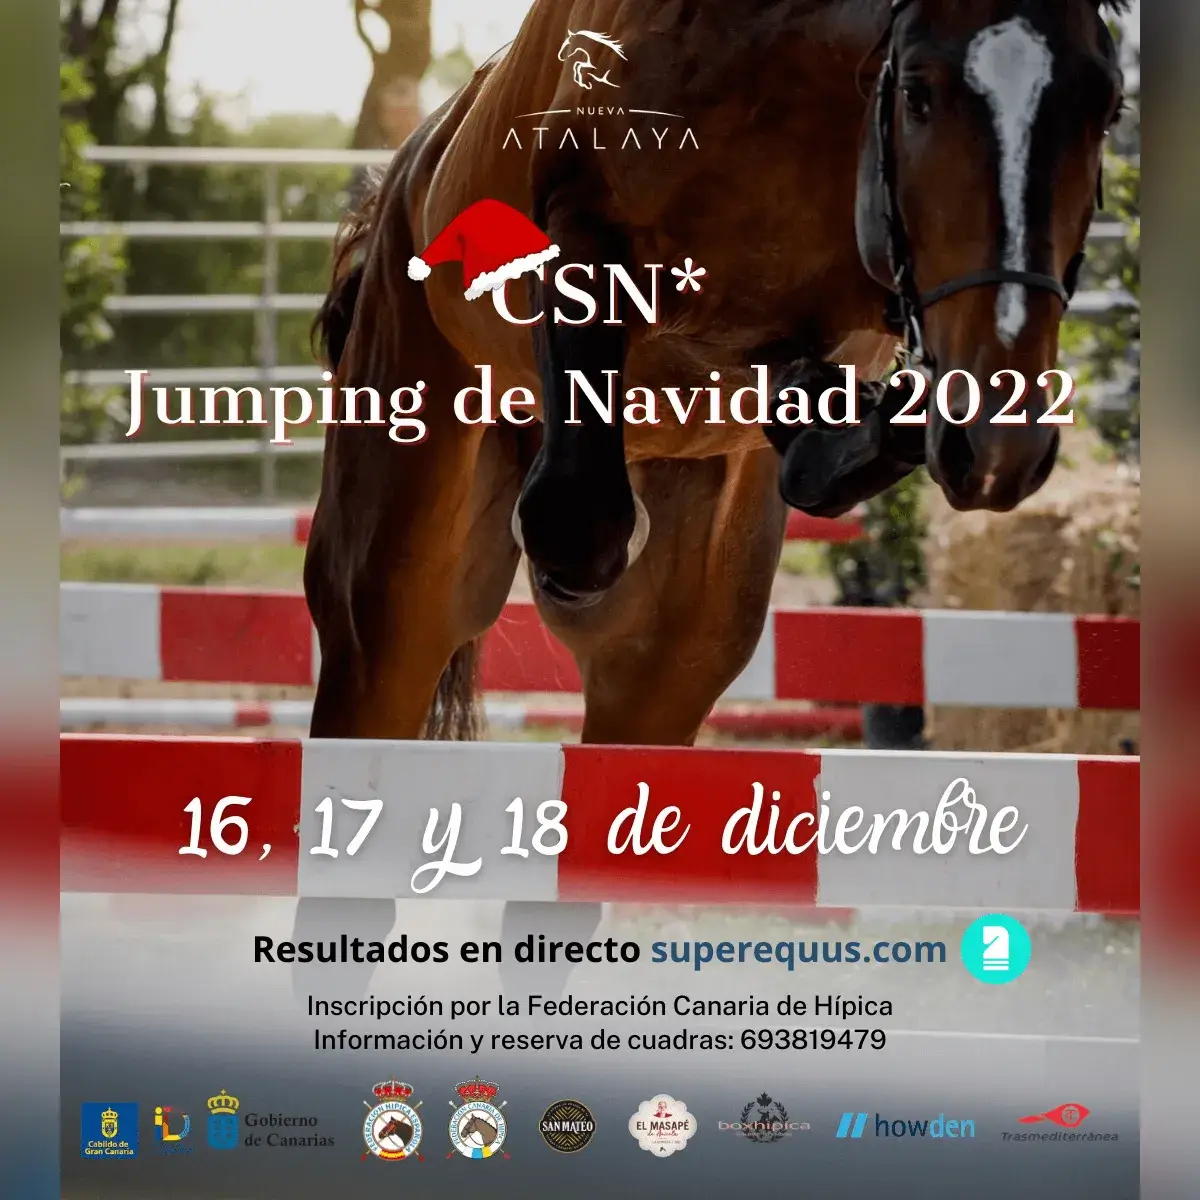 Cartel de CSN* Jumping de Navidad 2022